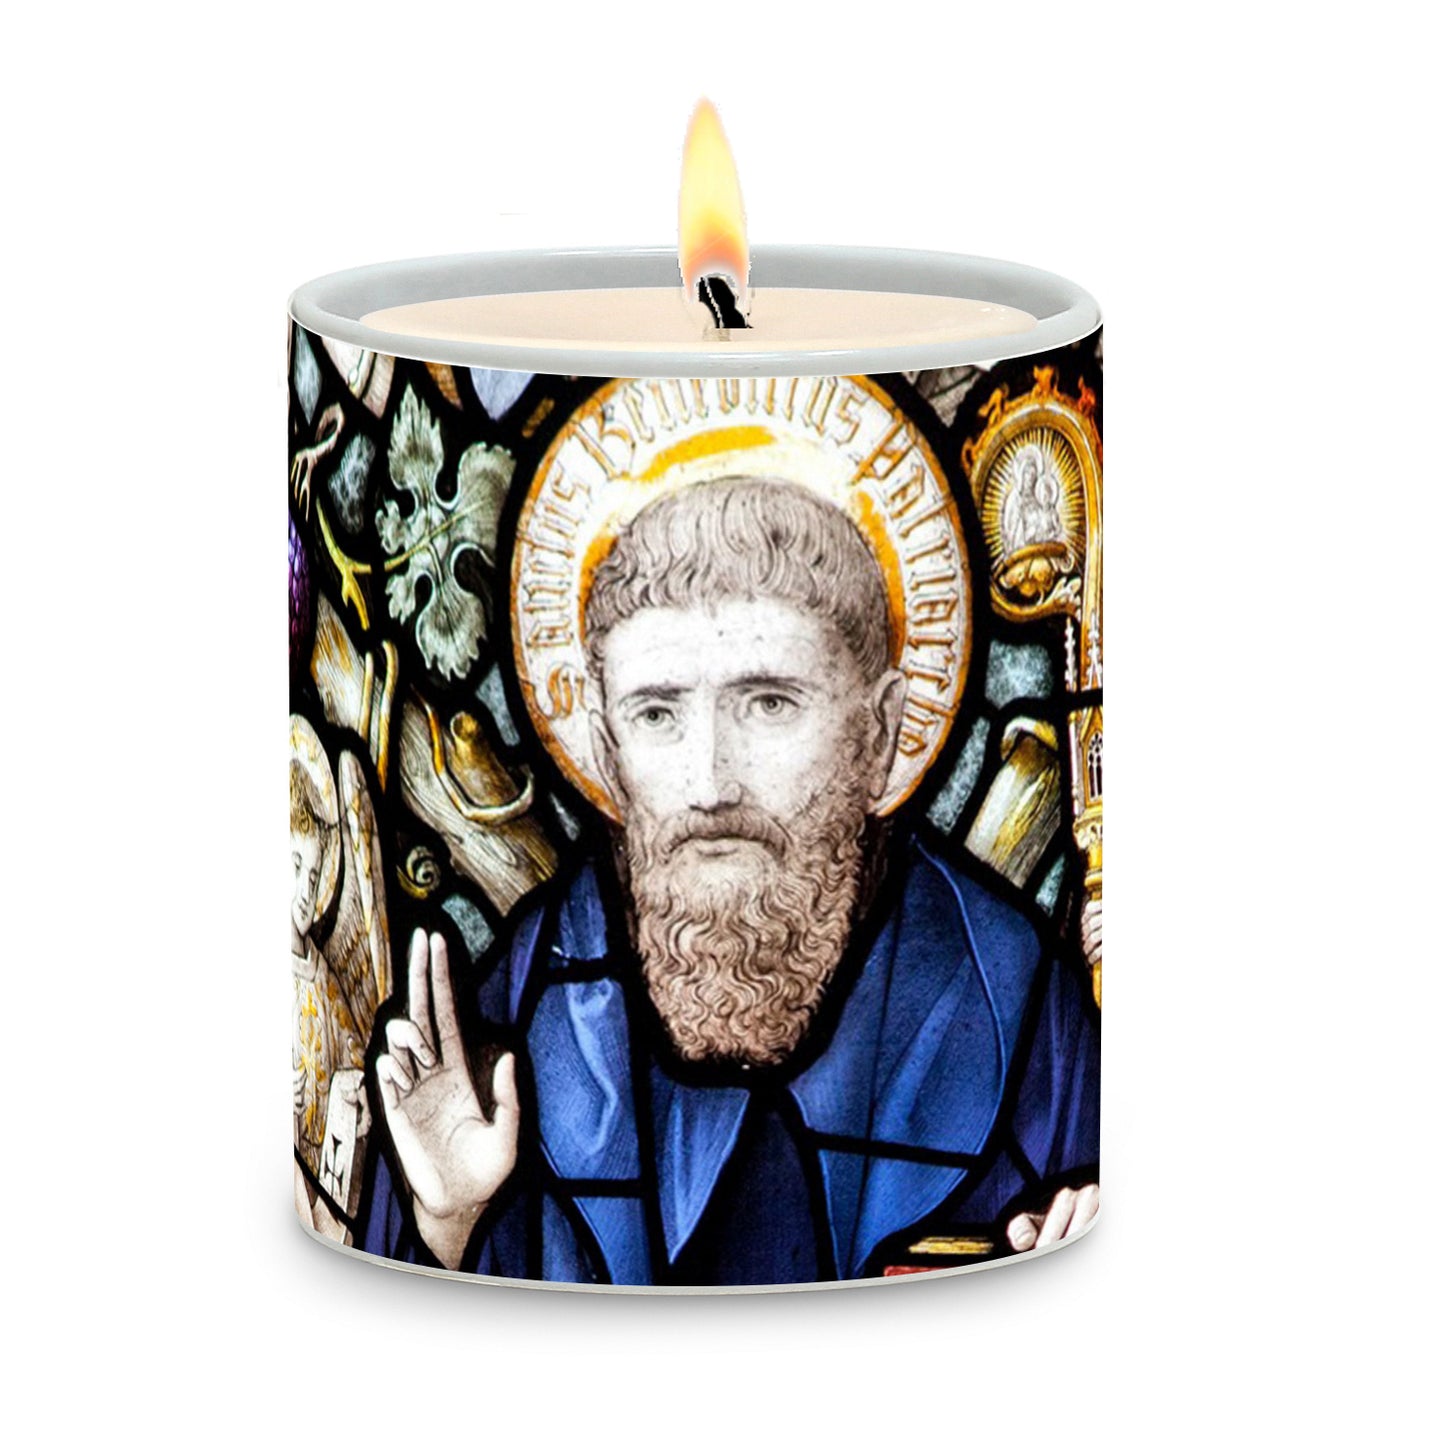 SUBLIMART: Prayer Candle - Porcelain Soy Wax Candle - St. Benedict